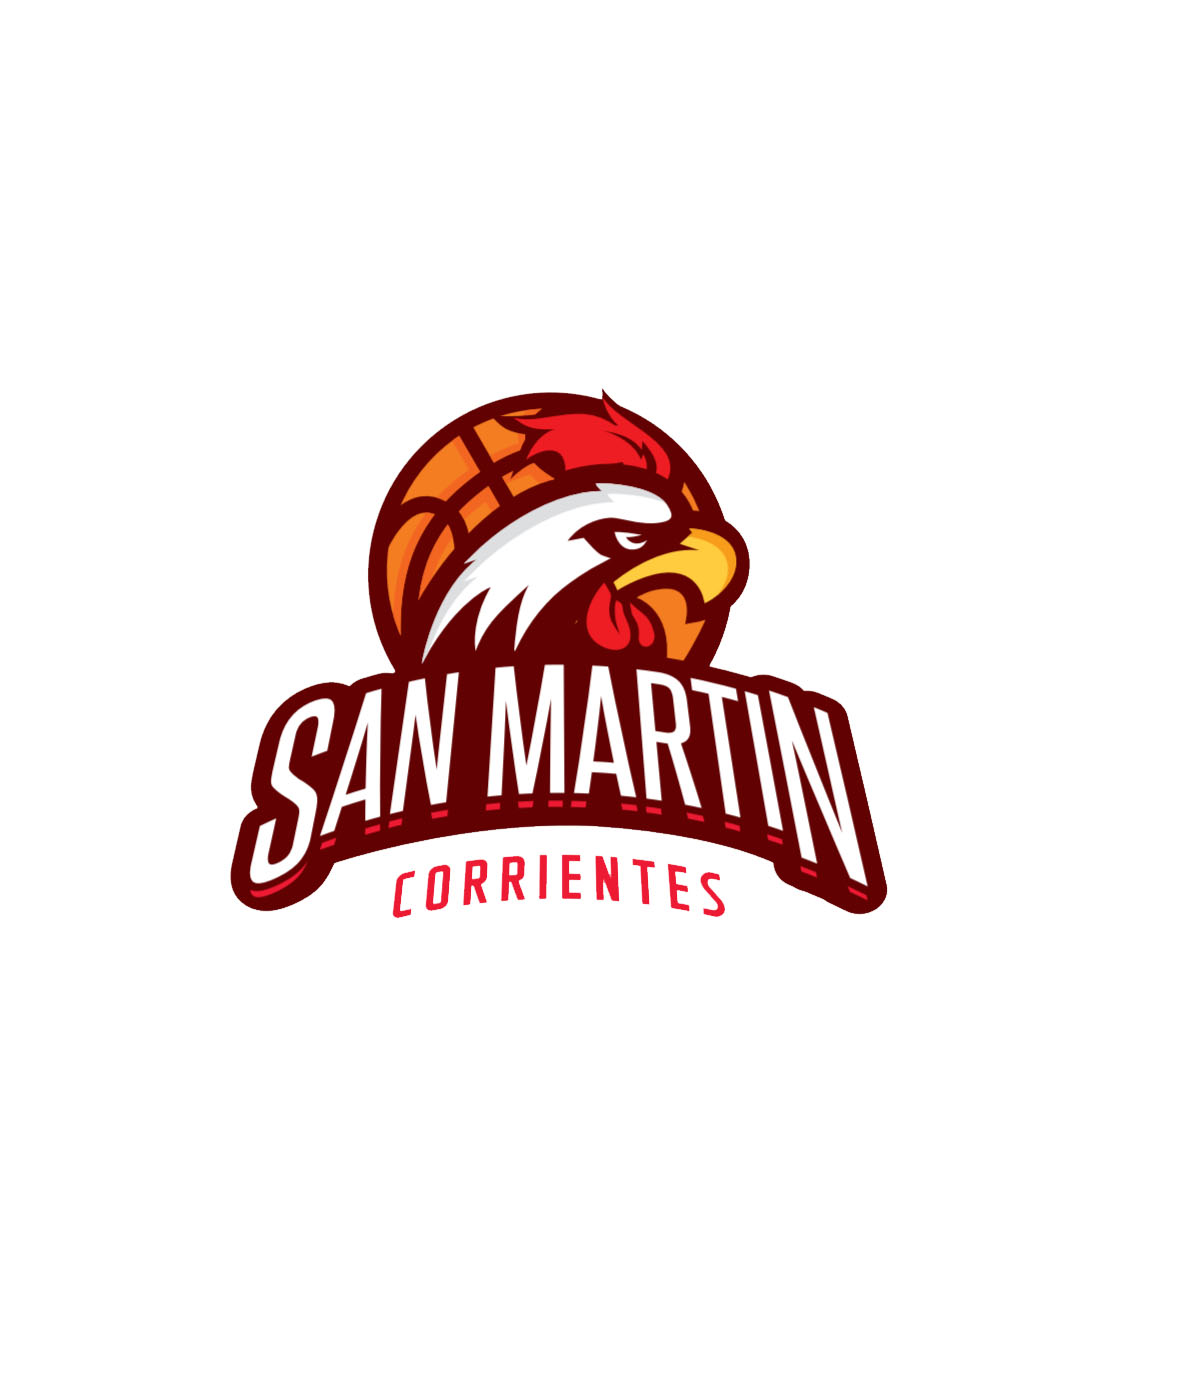 San Martin (Corrientes)